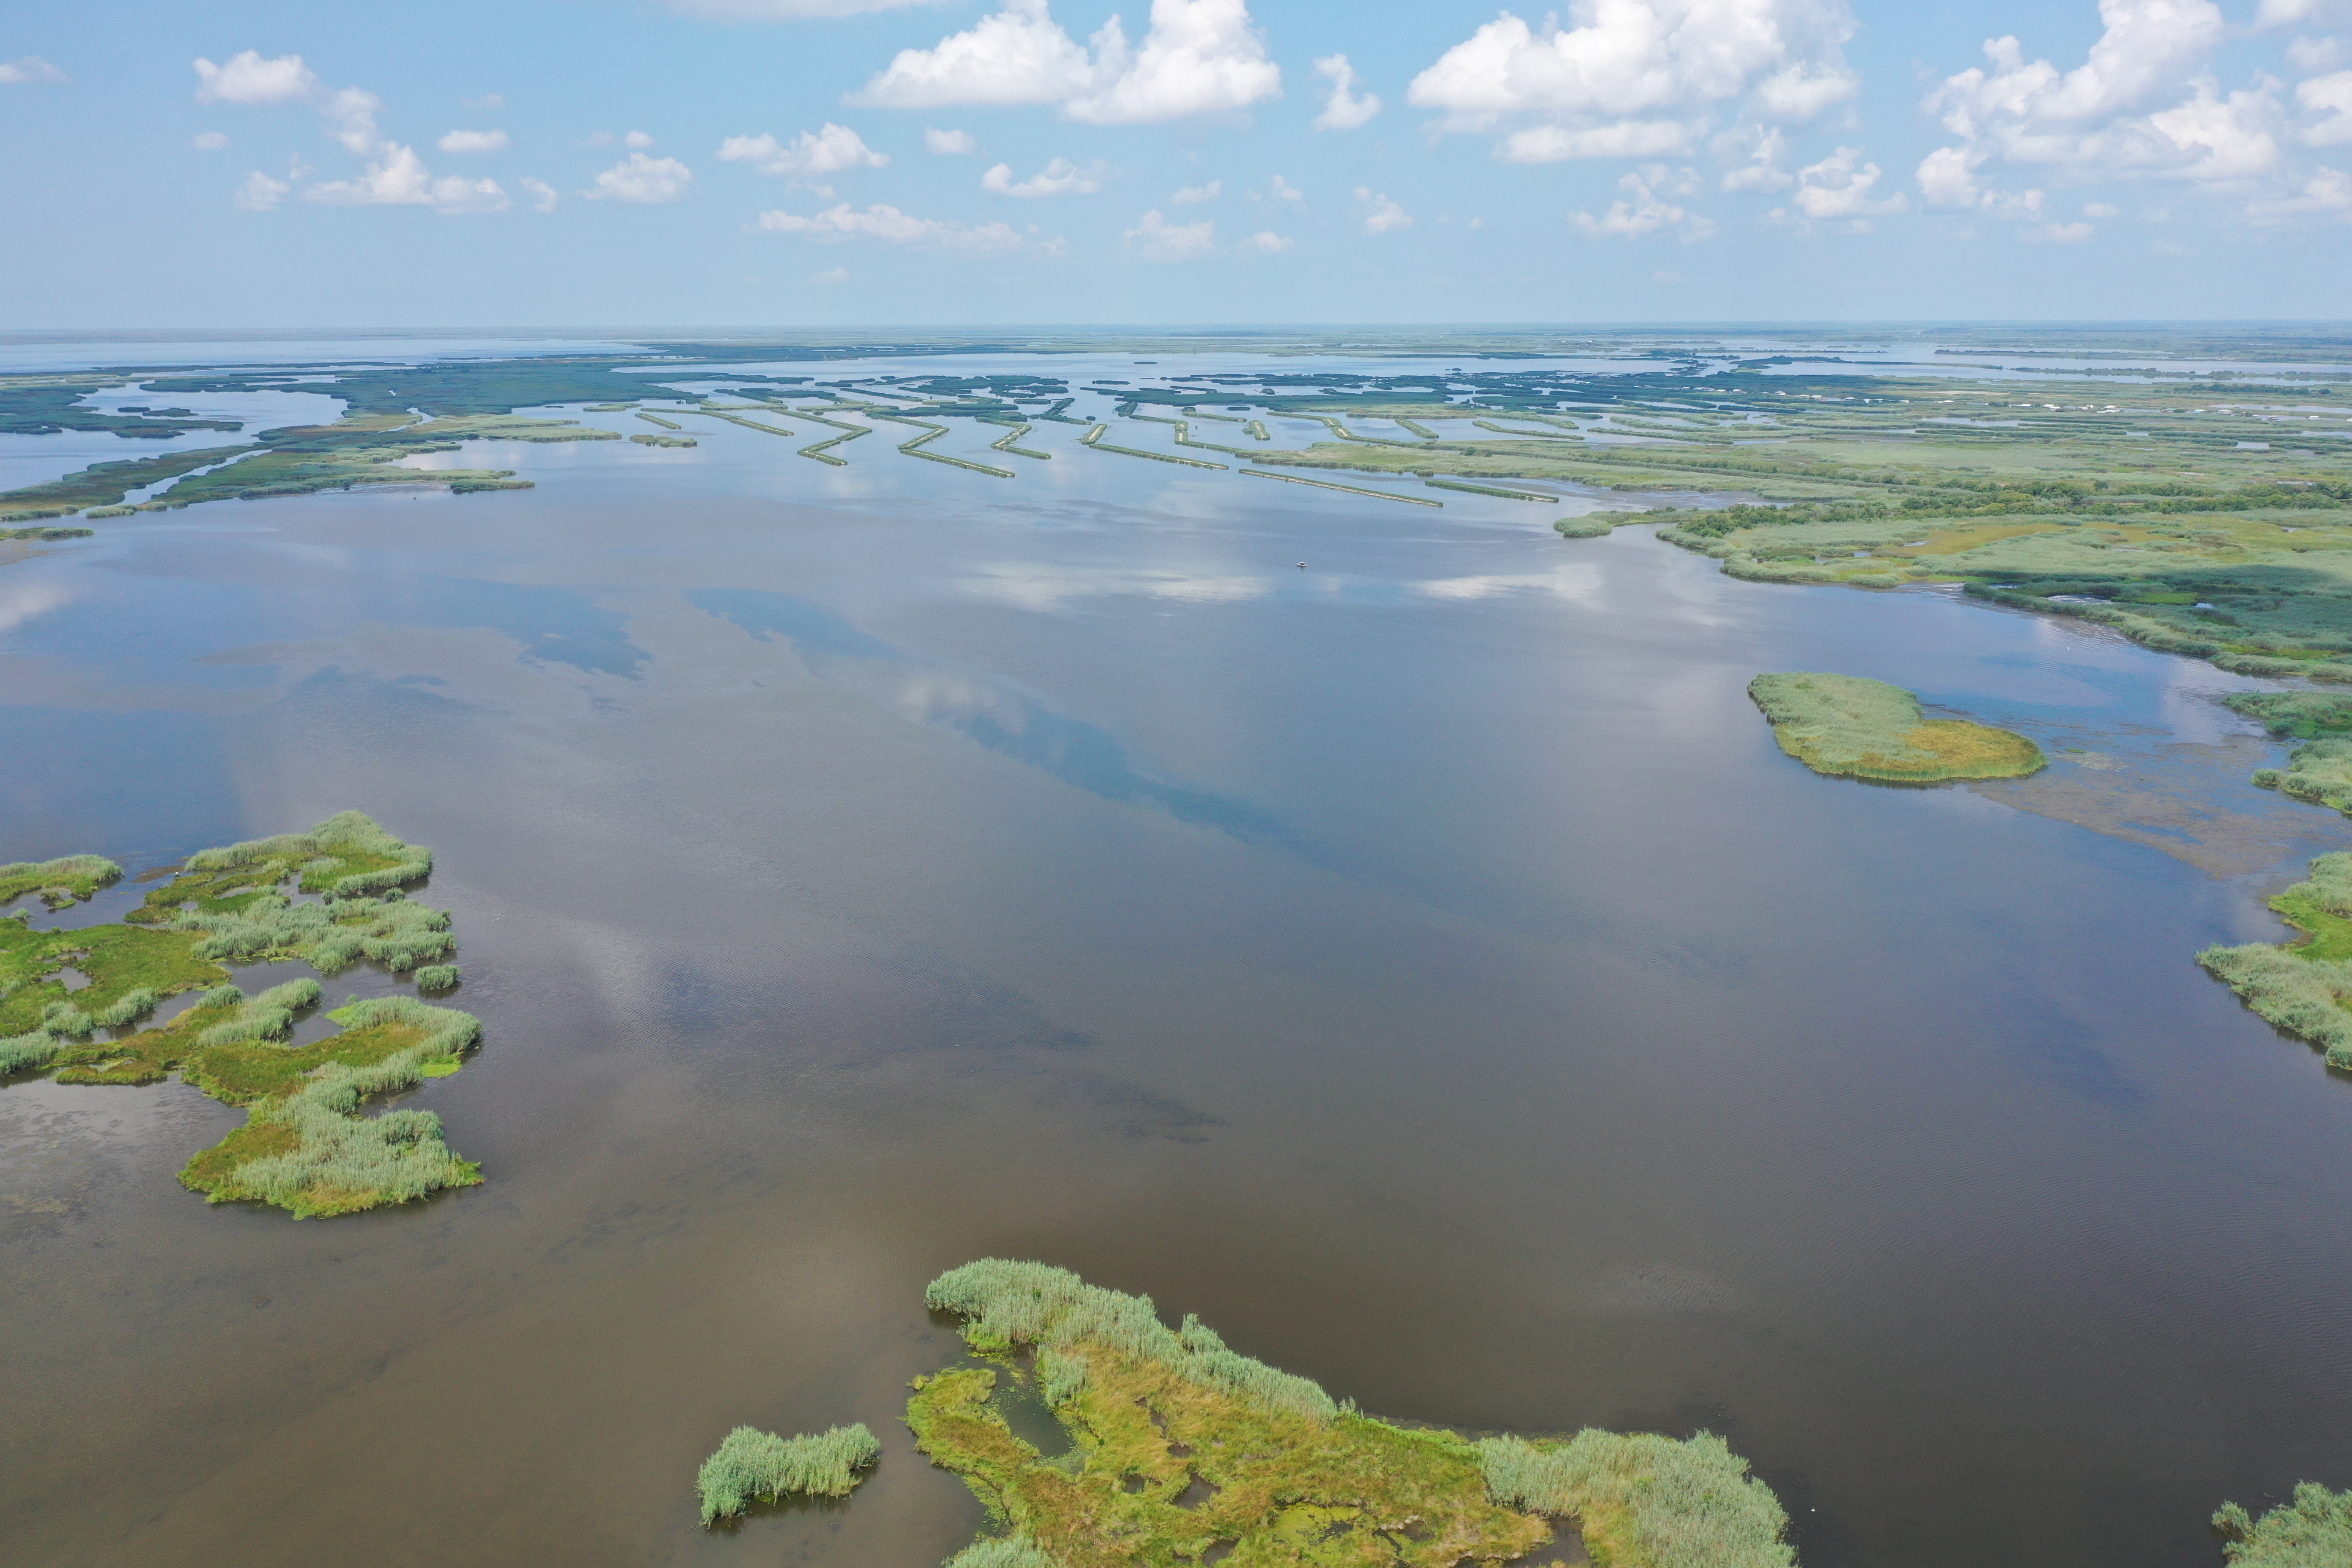 Southern Louisiana Partners Awarded $3.4 million for Coastal Wetland Habitat Enhancements